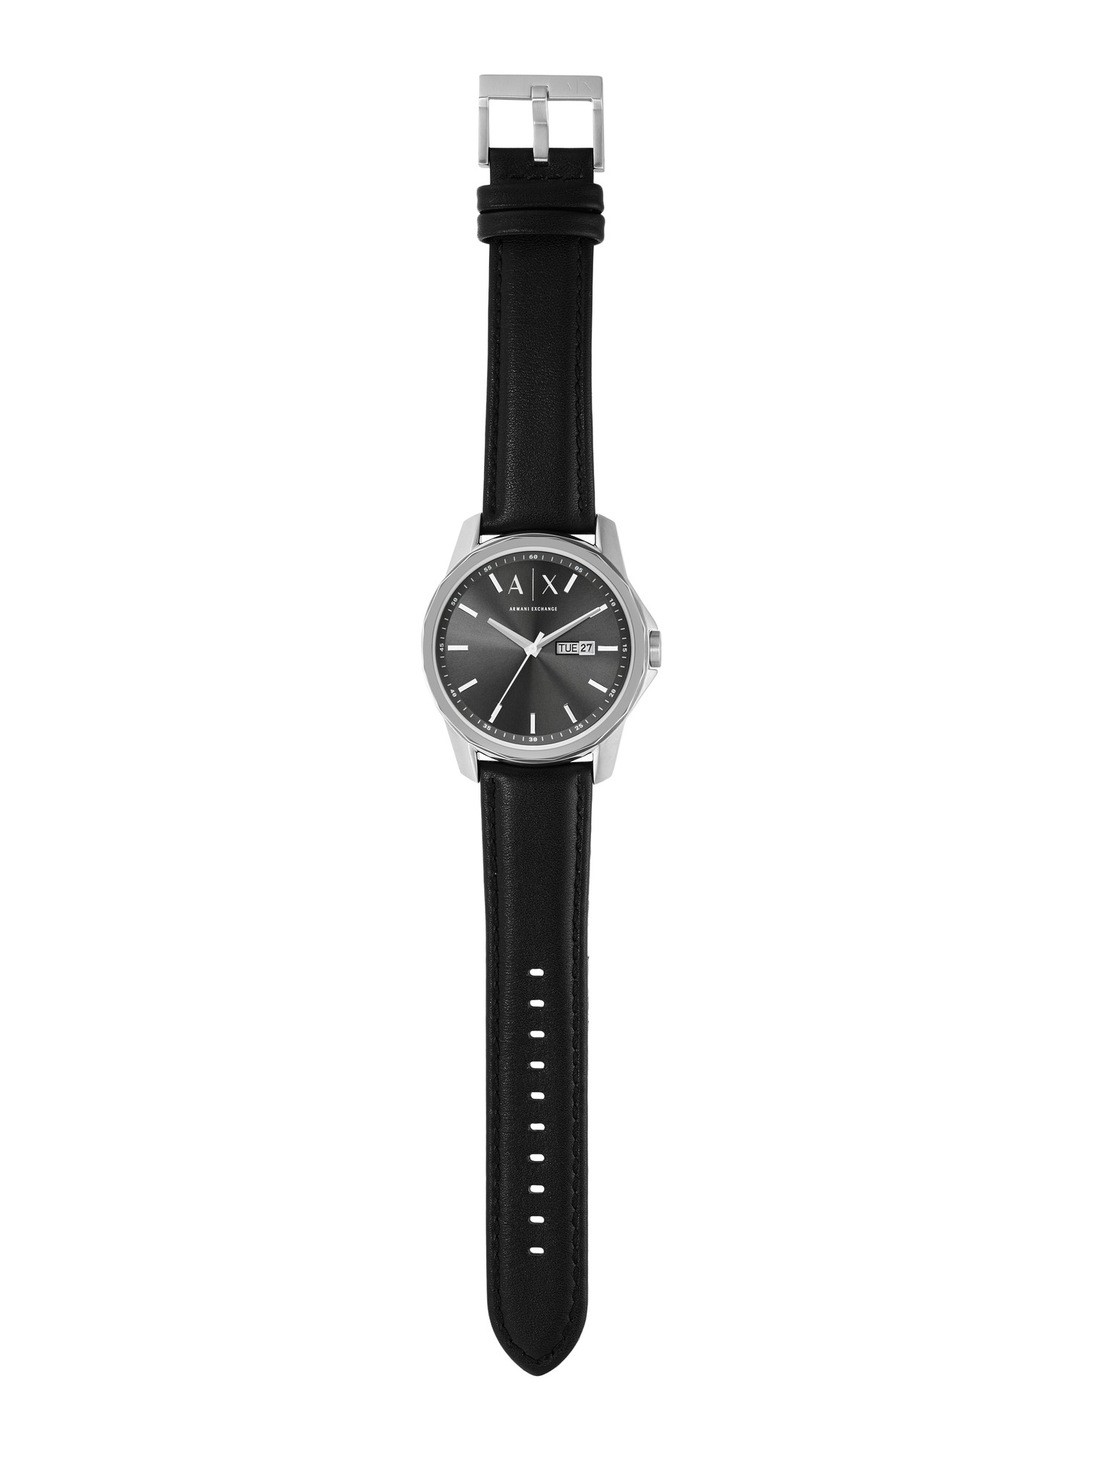 Armani Exchange Black Watch AX1735 - Watch Station India